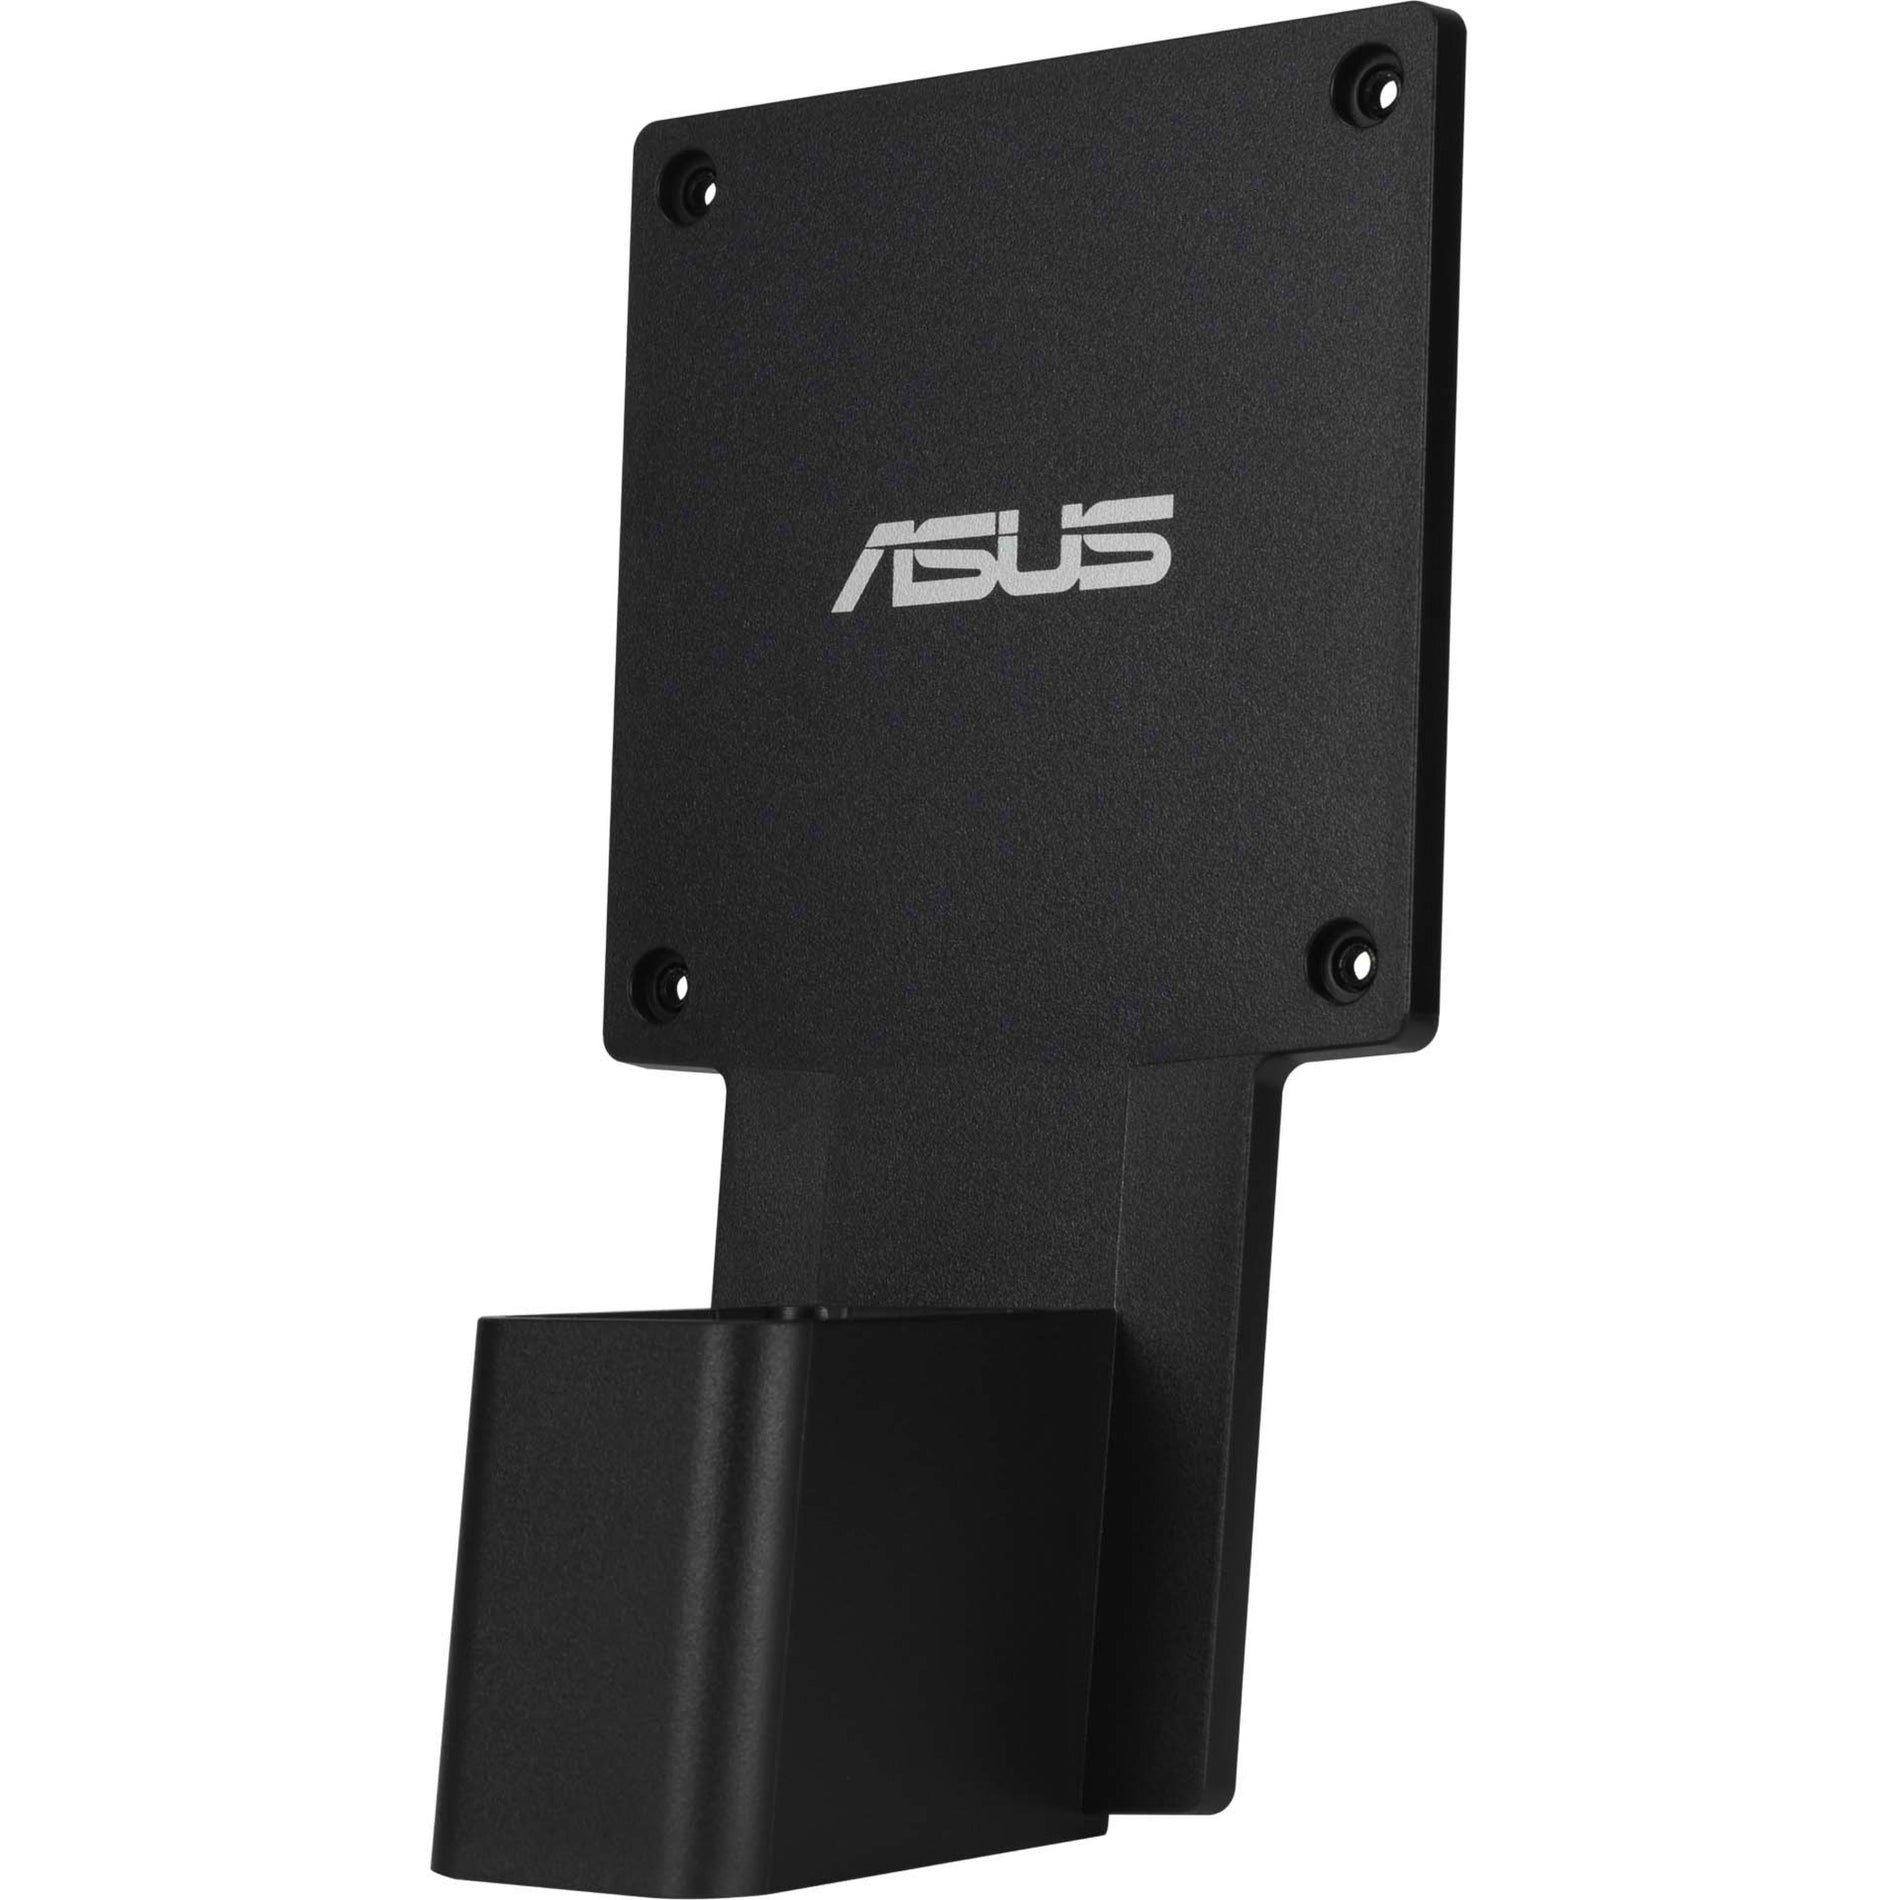 Asus MKT02 mini-PC Mounting Kit - VESA 100x100mm Compatible, Black